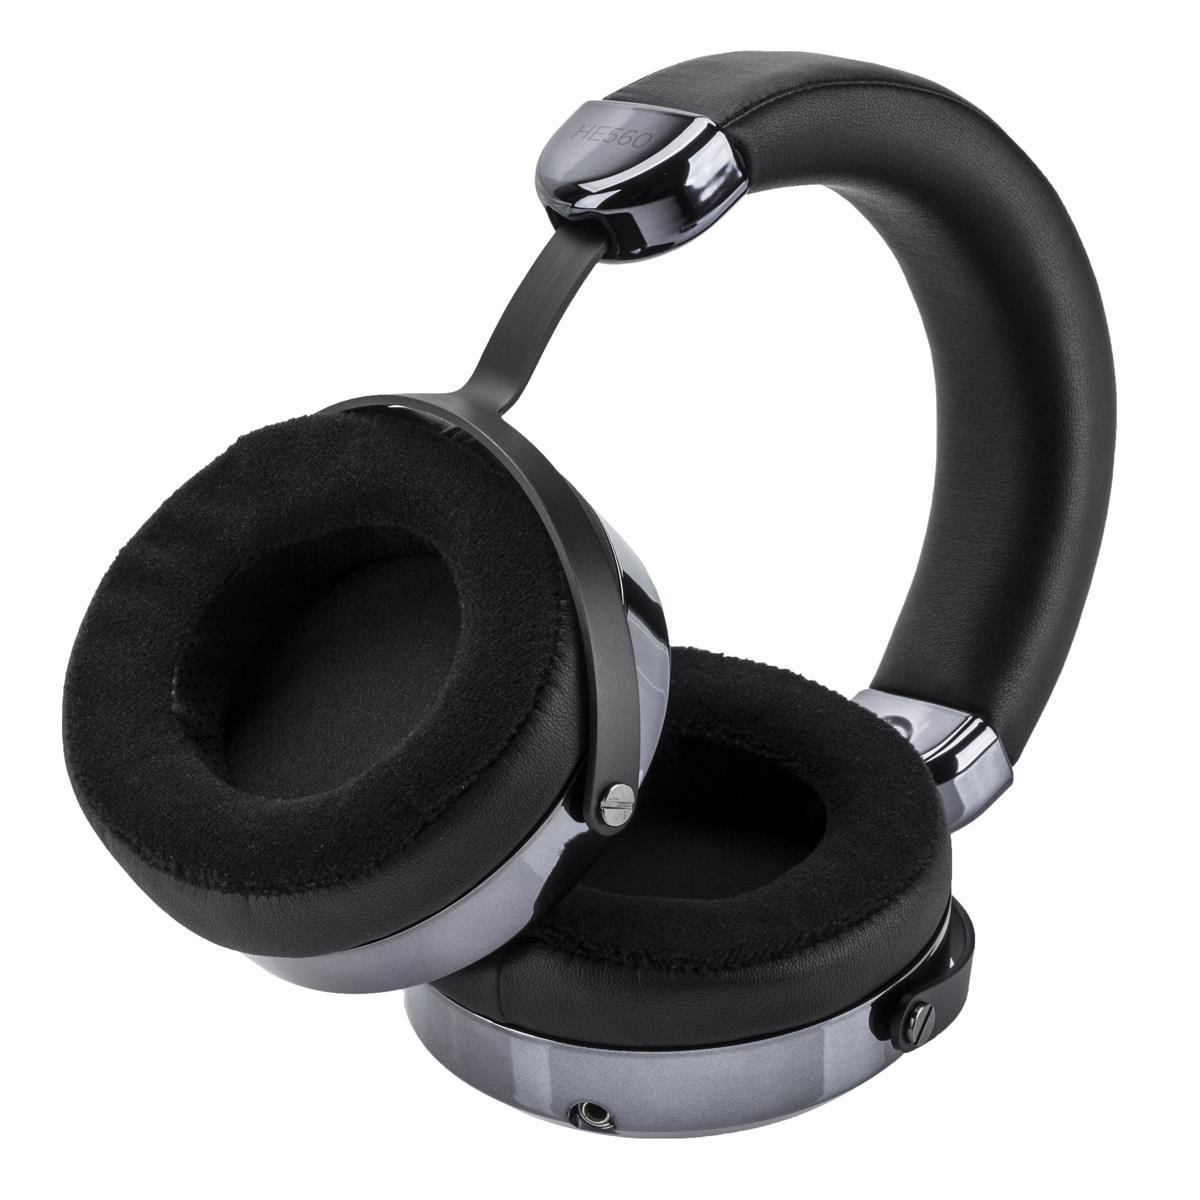 HiFiMan HE-560 V4 Premium Planar Magnetic Headphones for $229 Shipped